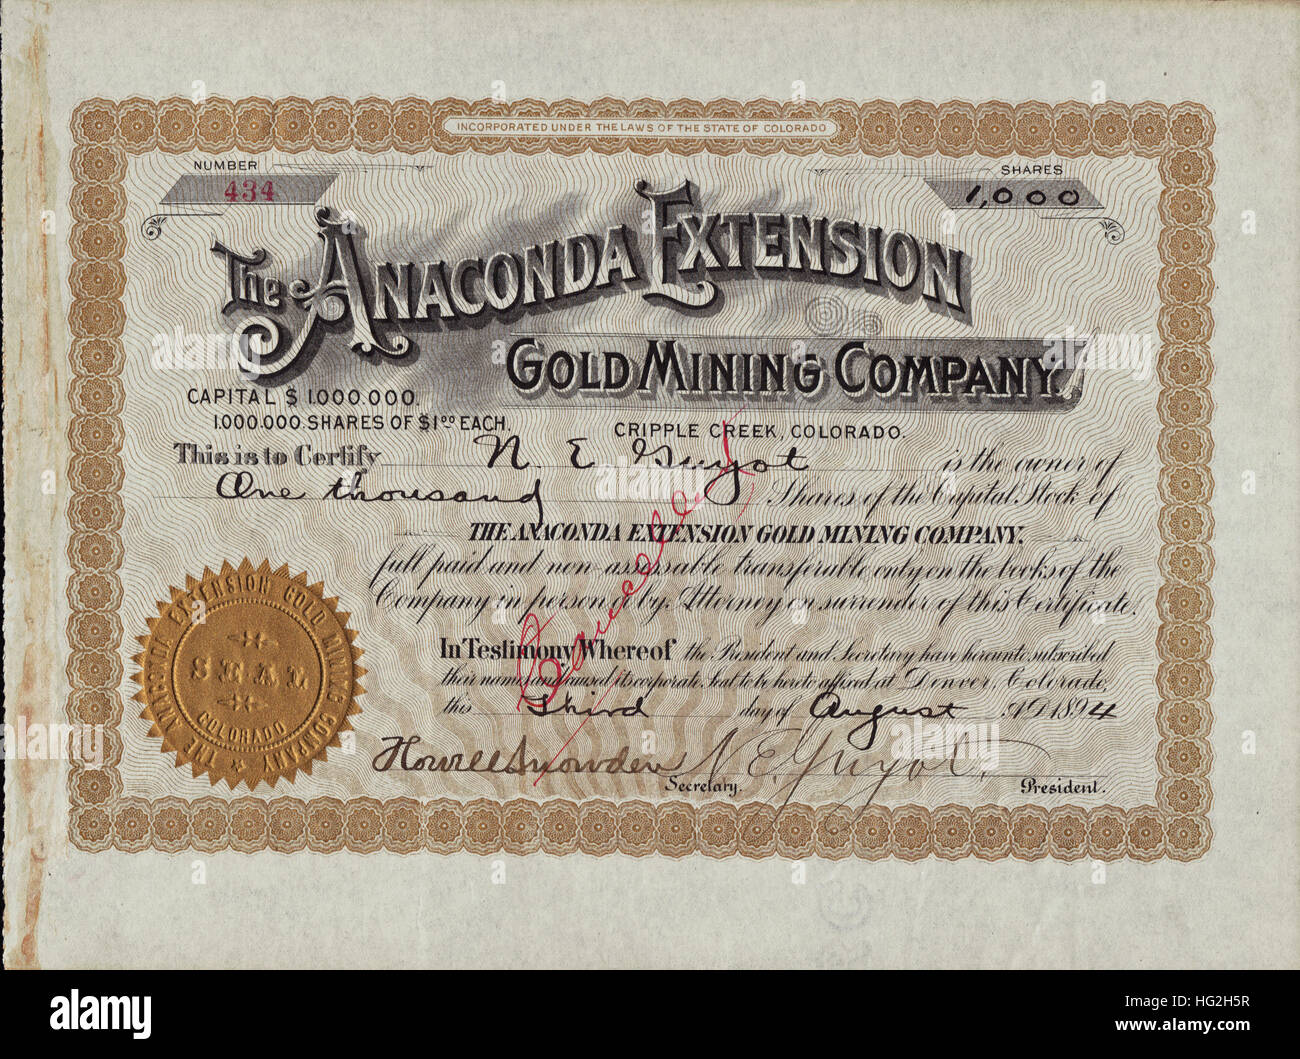 1894 Anaconda Extension Gold Mining Company Stock Certificate - Cripple Creek, Colorado - USA Stock Photo